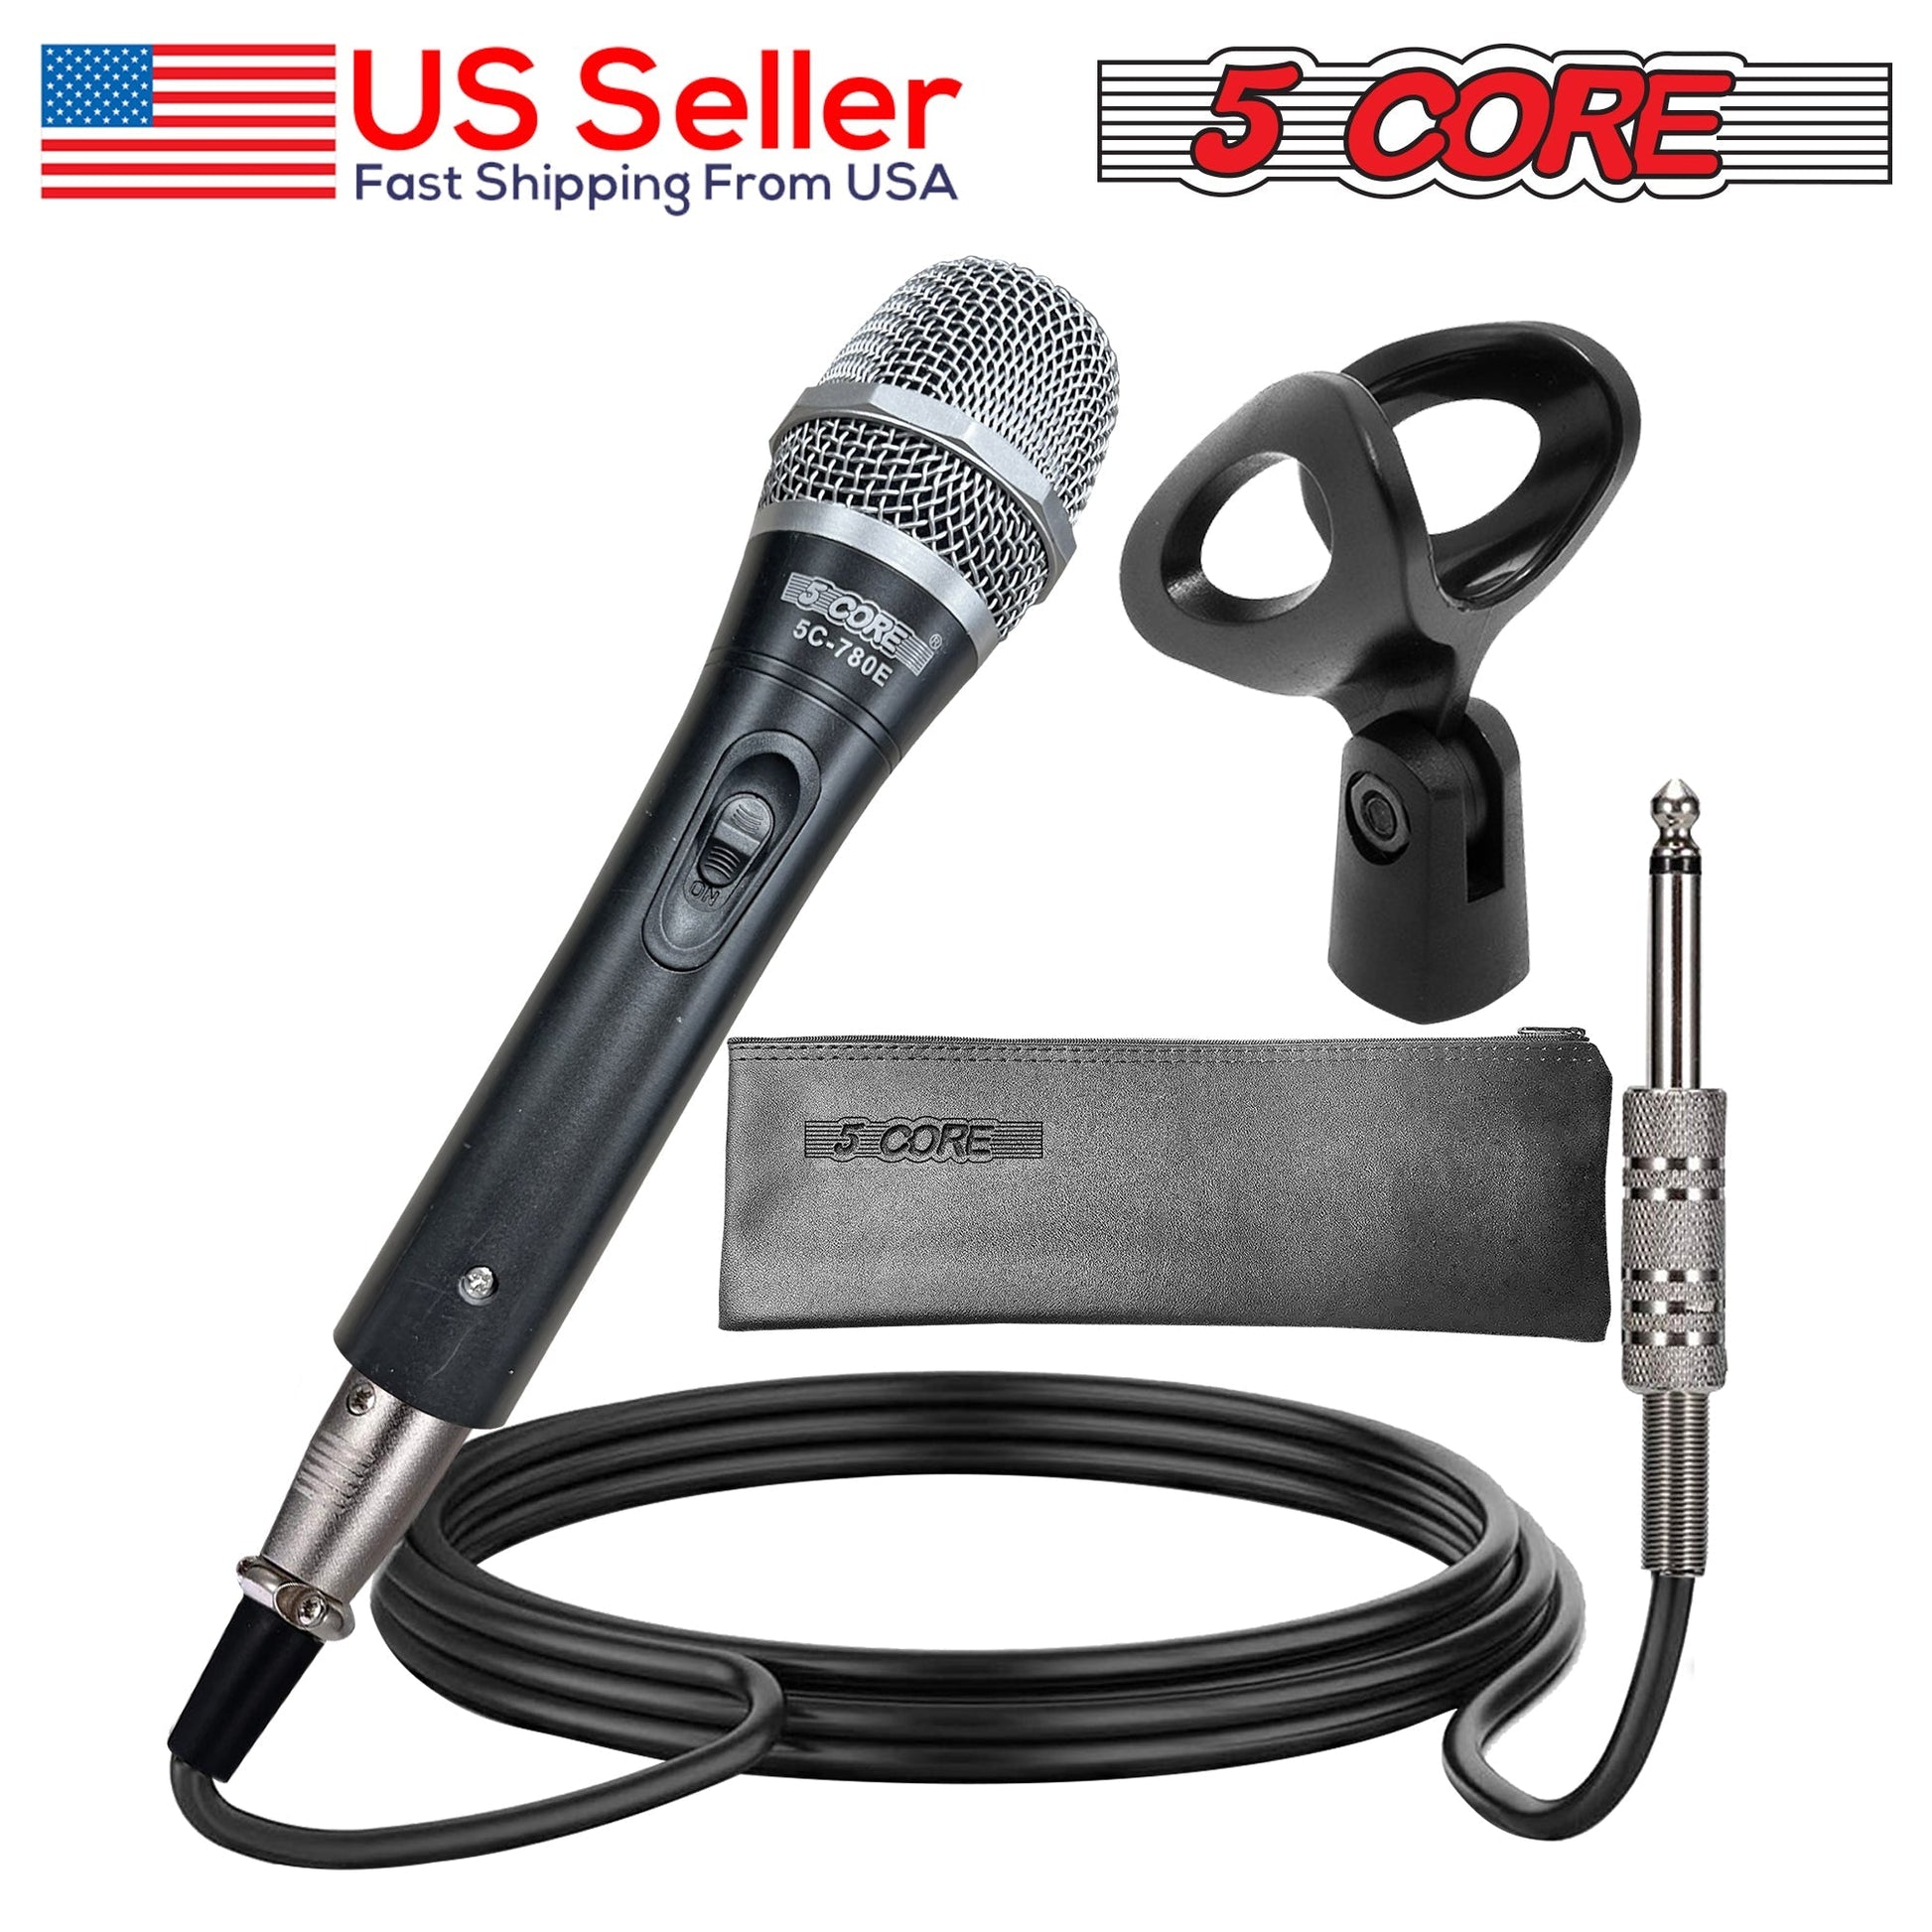 5 Core Microphone Professional Dynamic Karaoke XLR Wired Mic w ON/OFF Switch Pop Filter Cardioid Unidirectional Pickup Handheld Micrófono -ND-7800X 2PCS-18